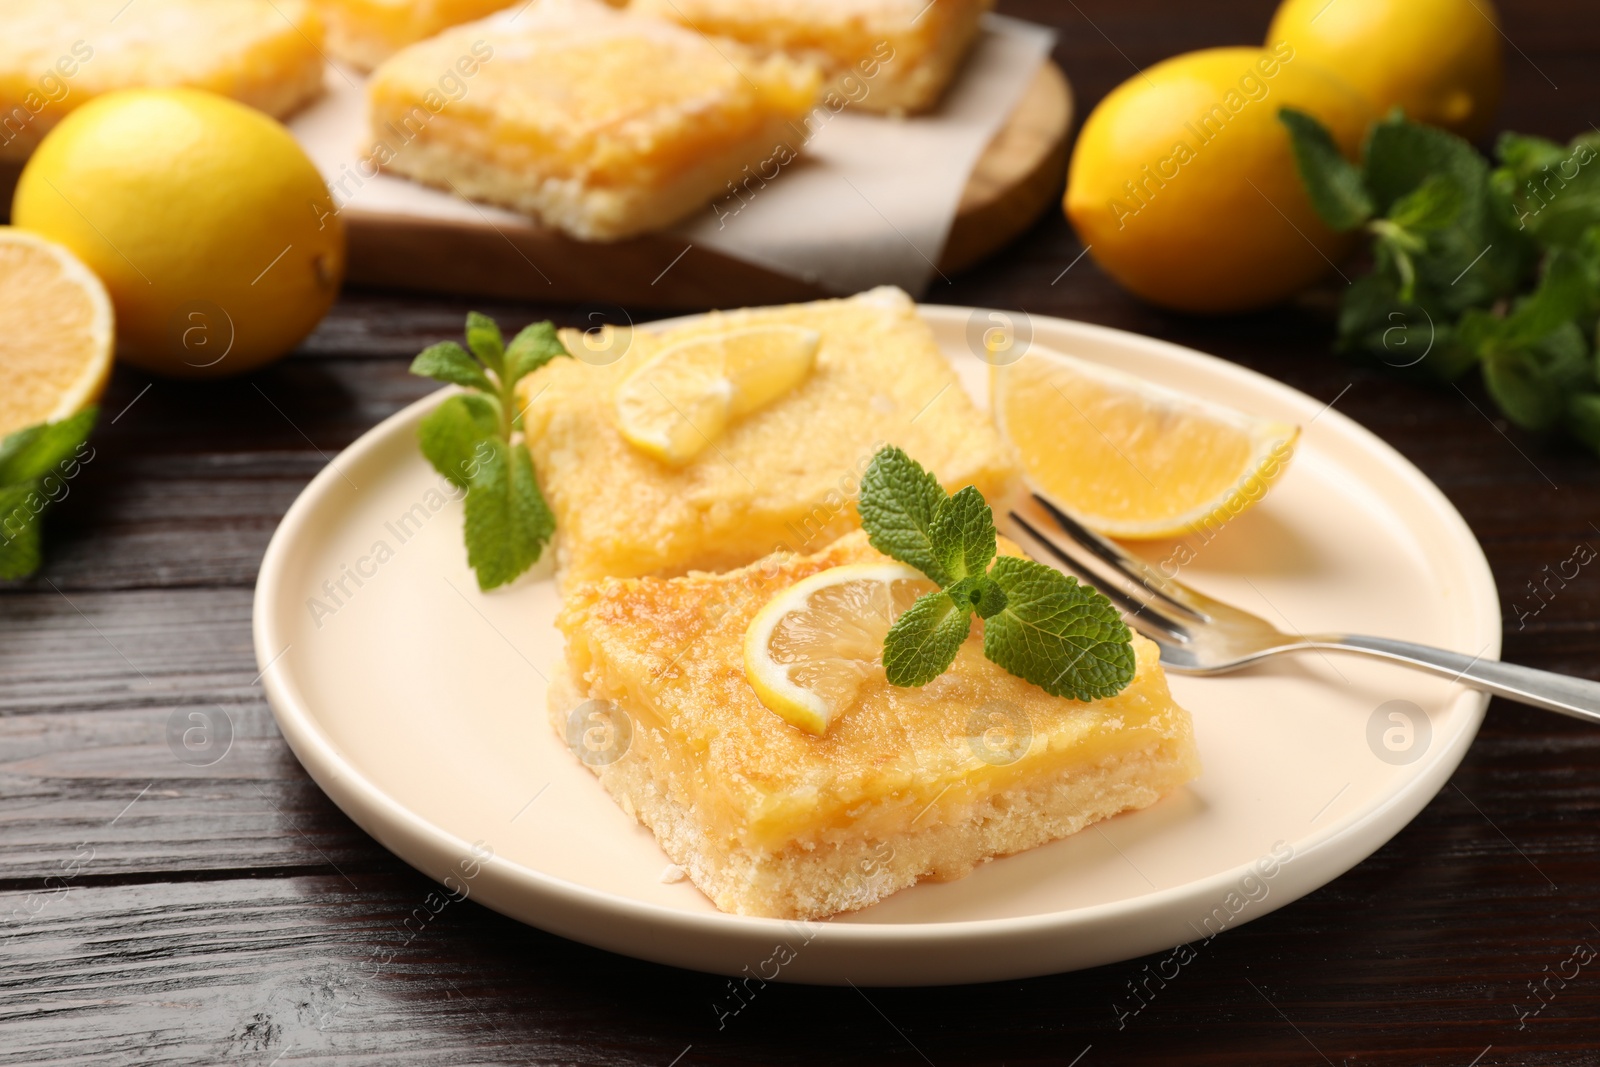 Photo of Tasty lemon bars served on wooden table, closeup